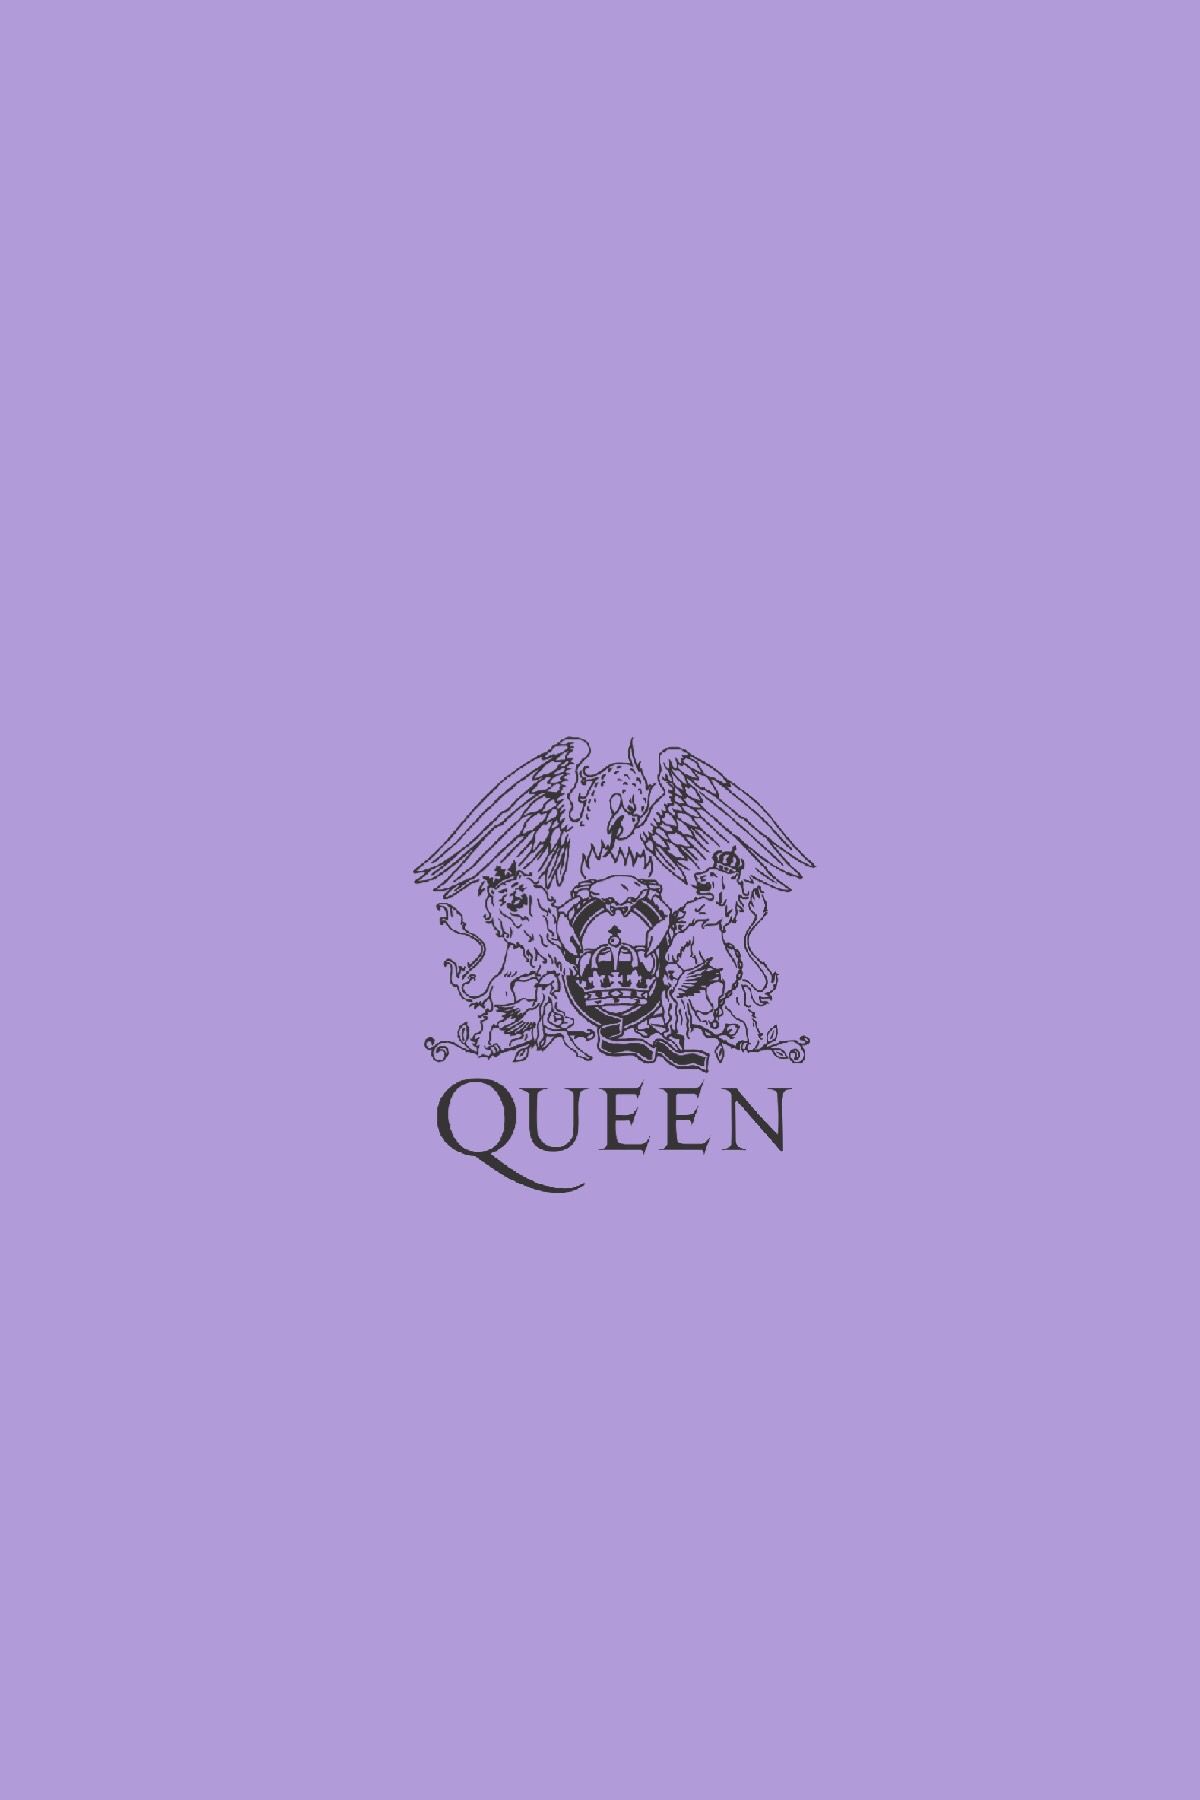 Queen Greatest Hits 10x1800 Wallpaper Teahub Io